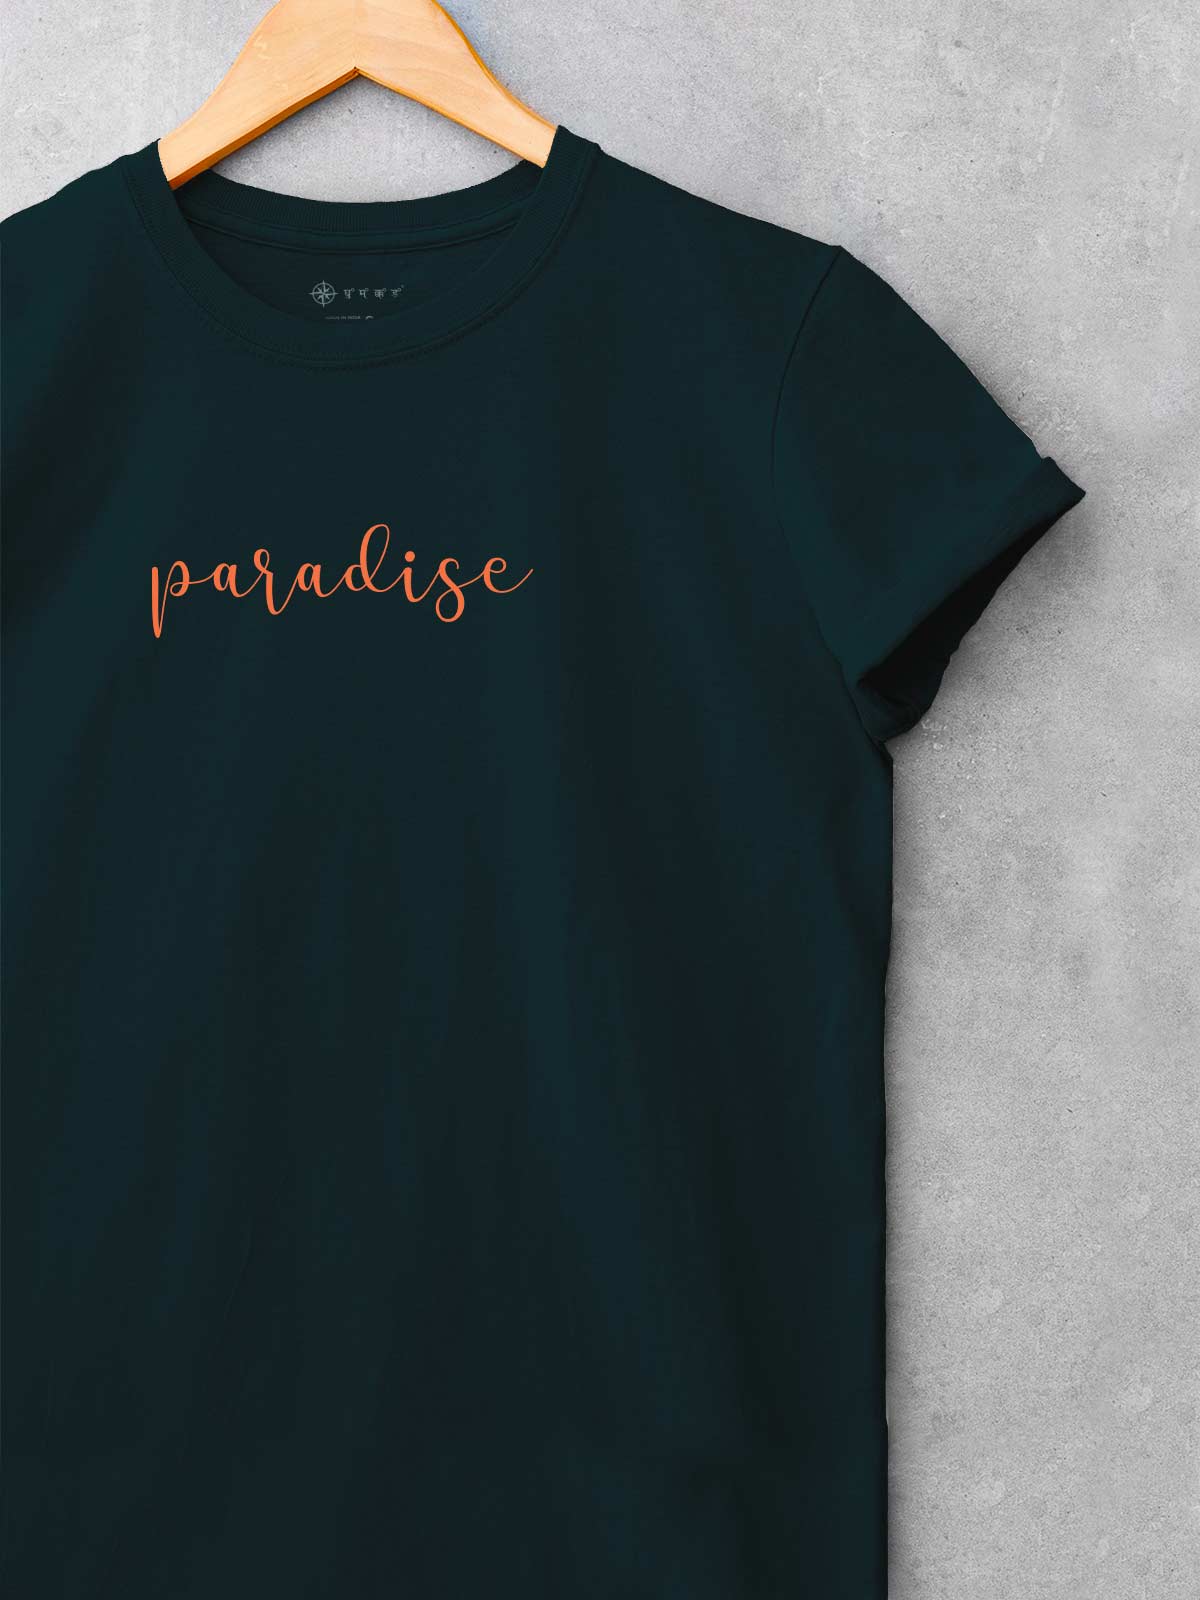 Explorers-paradise-backprint-t-shirt-for-men by Ghumakkad